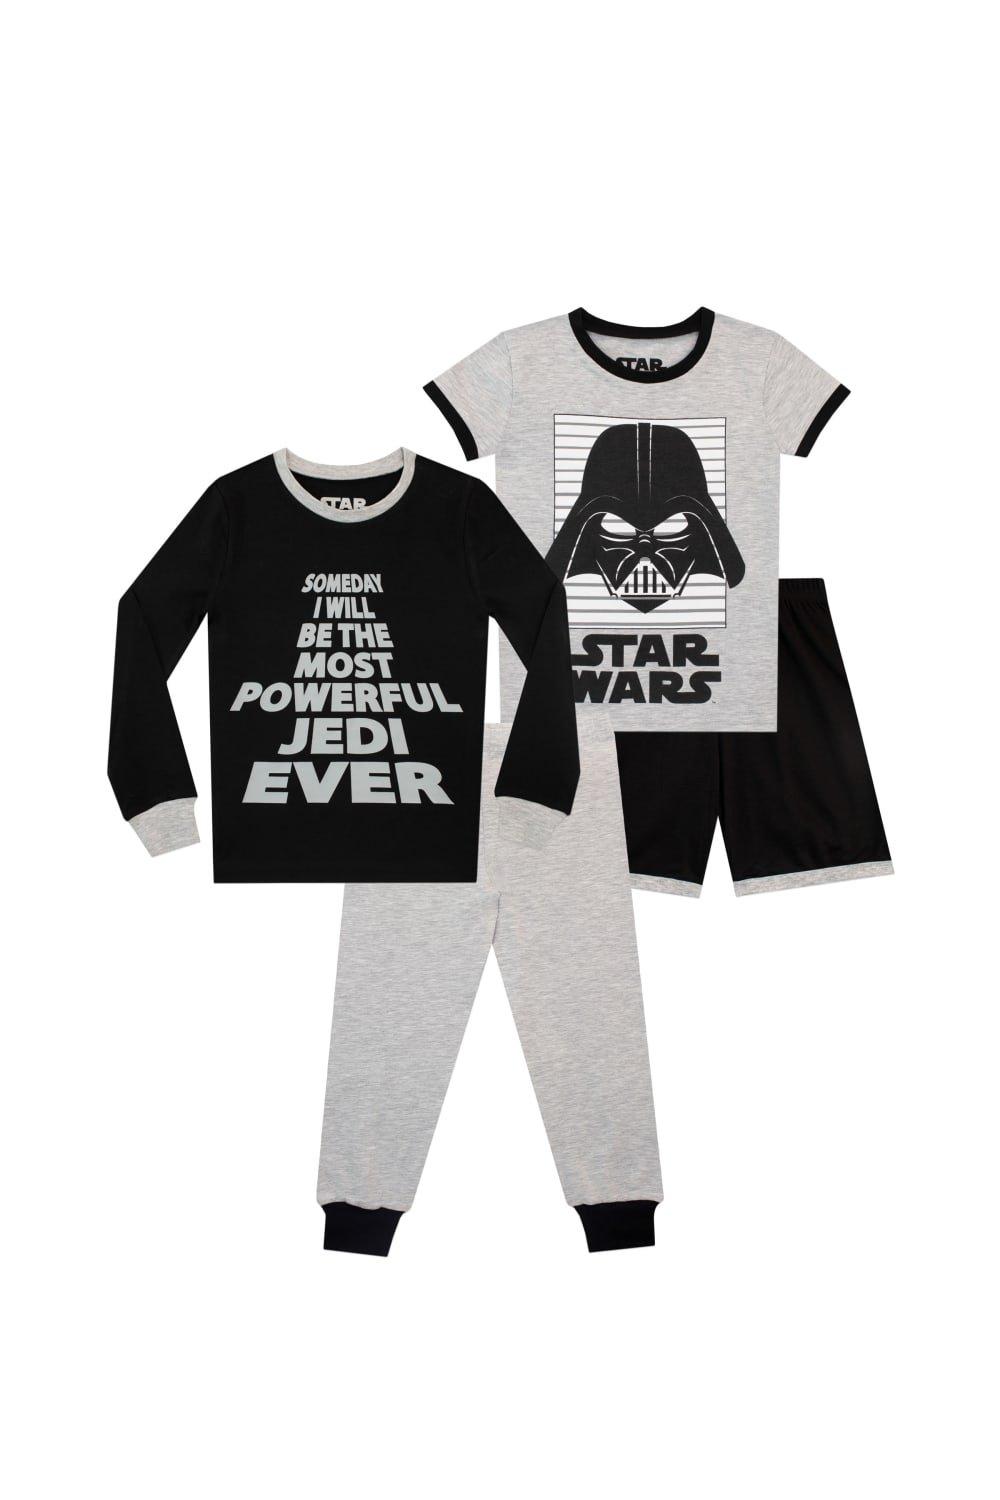 Комплект пижам Дарта Вейдера, 2 шт. Star Wars, серый комплект пижам дарта вейдера 2 шт star wars серый